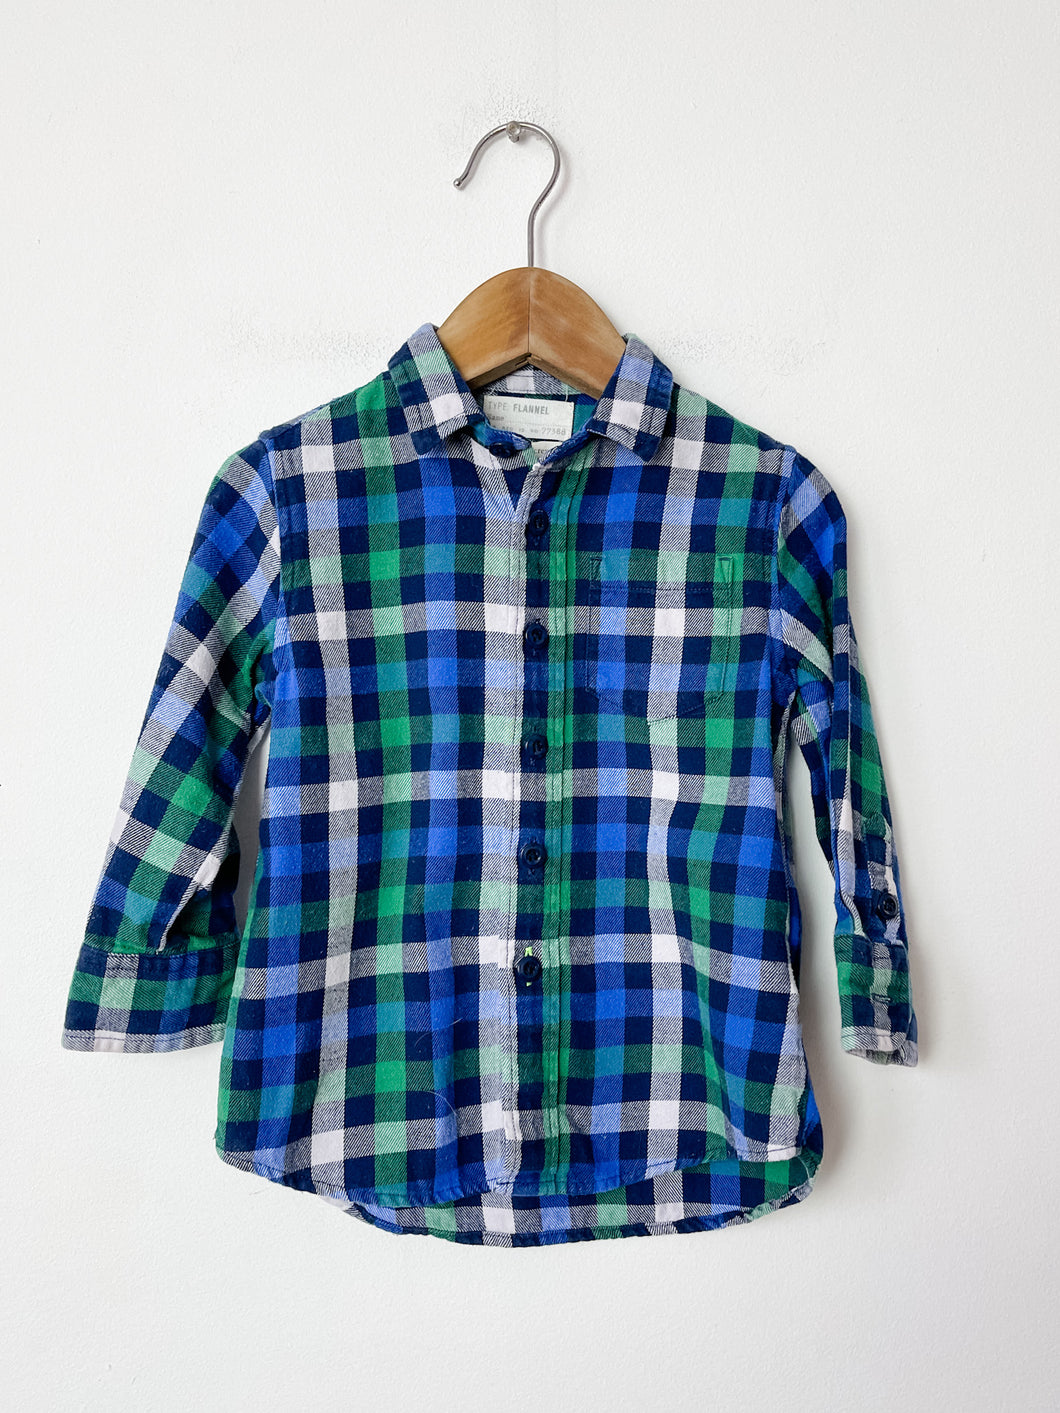 Plaid Flannel Crewcuts Shirt Size 2